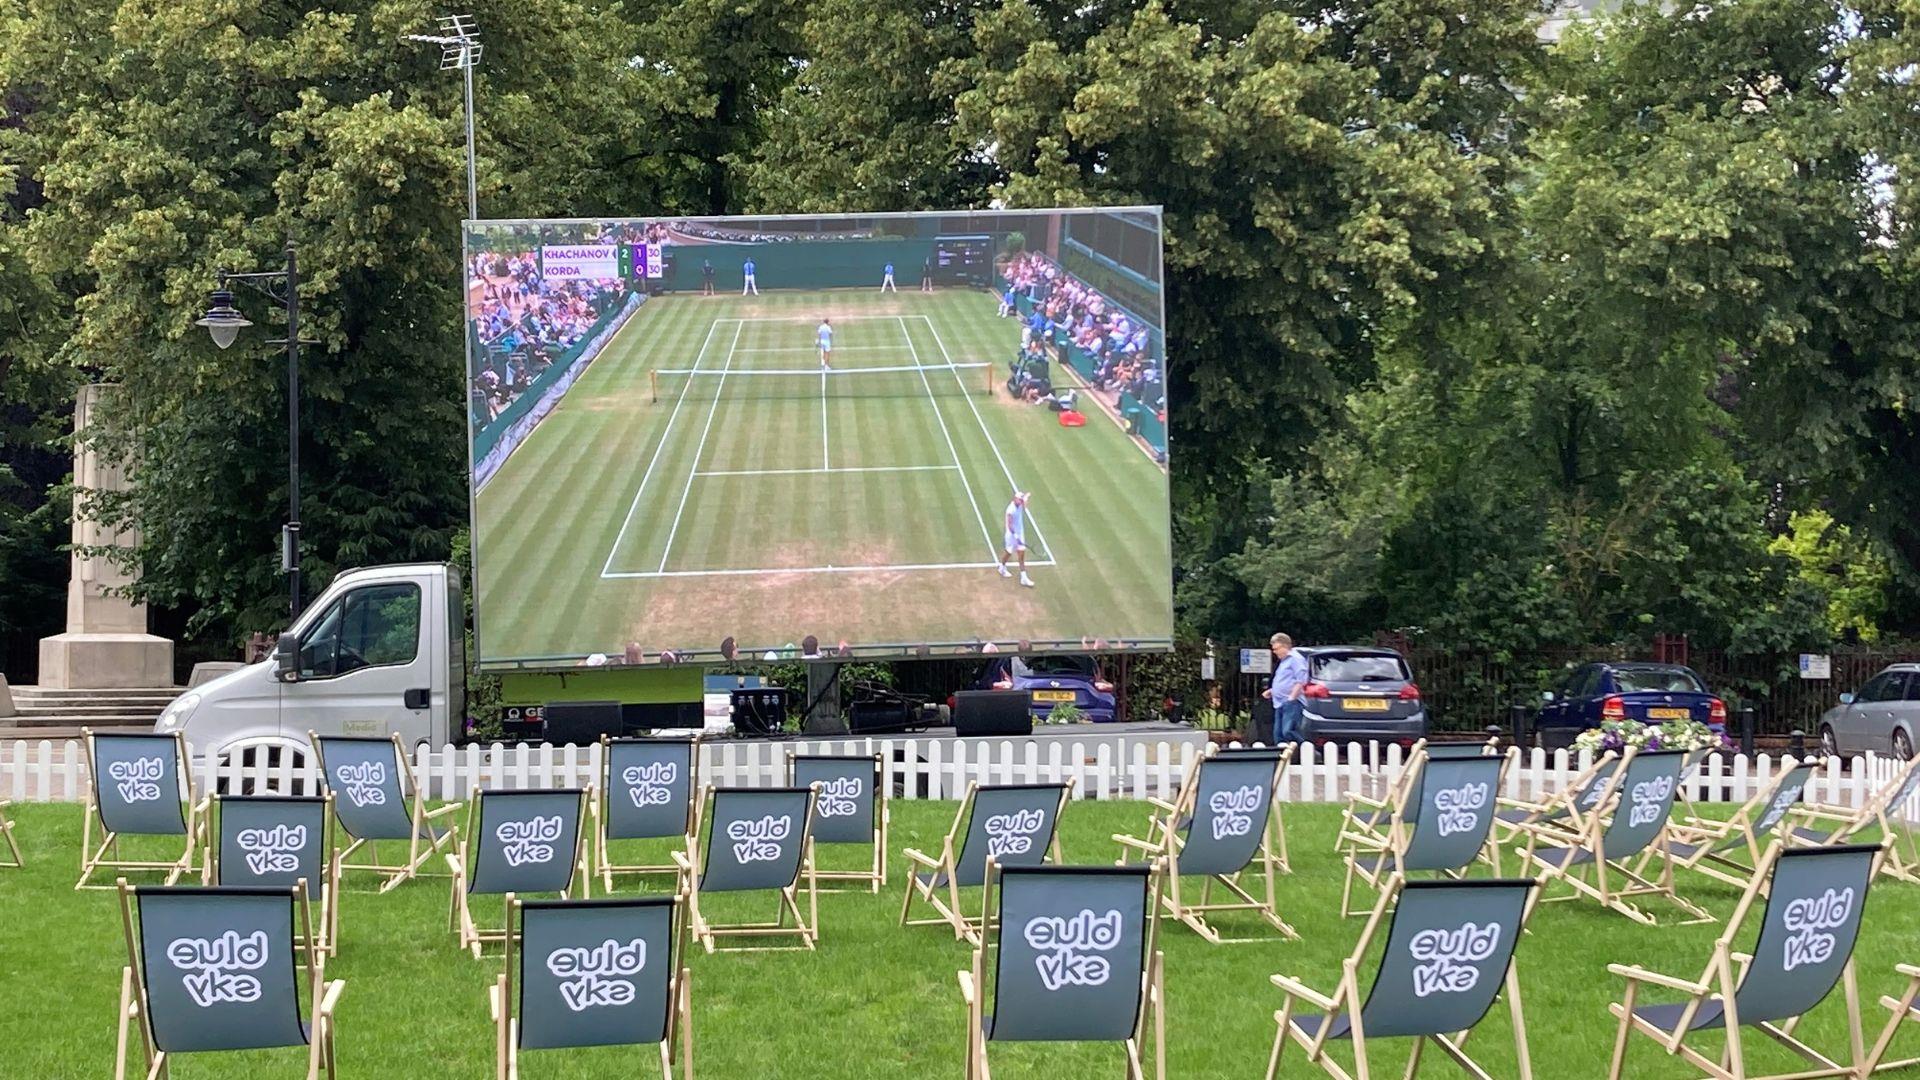 Deckchairs on lawn with Wimbledon tennis screening